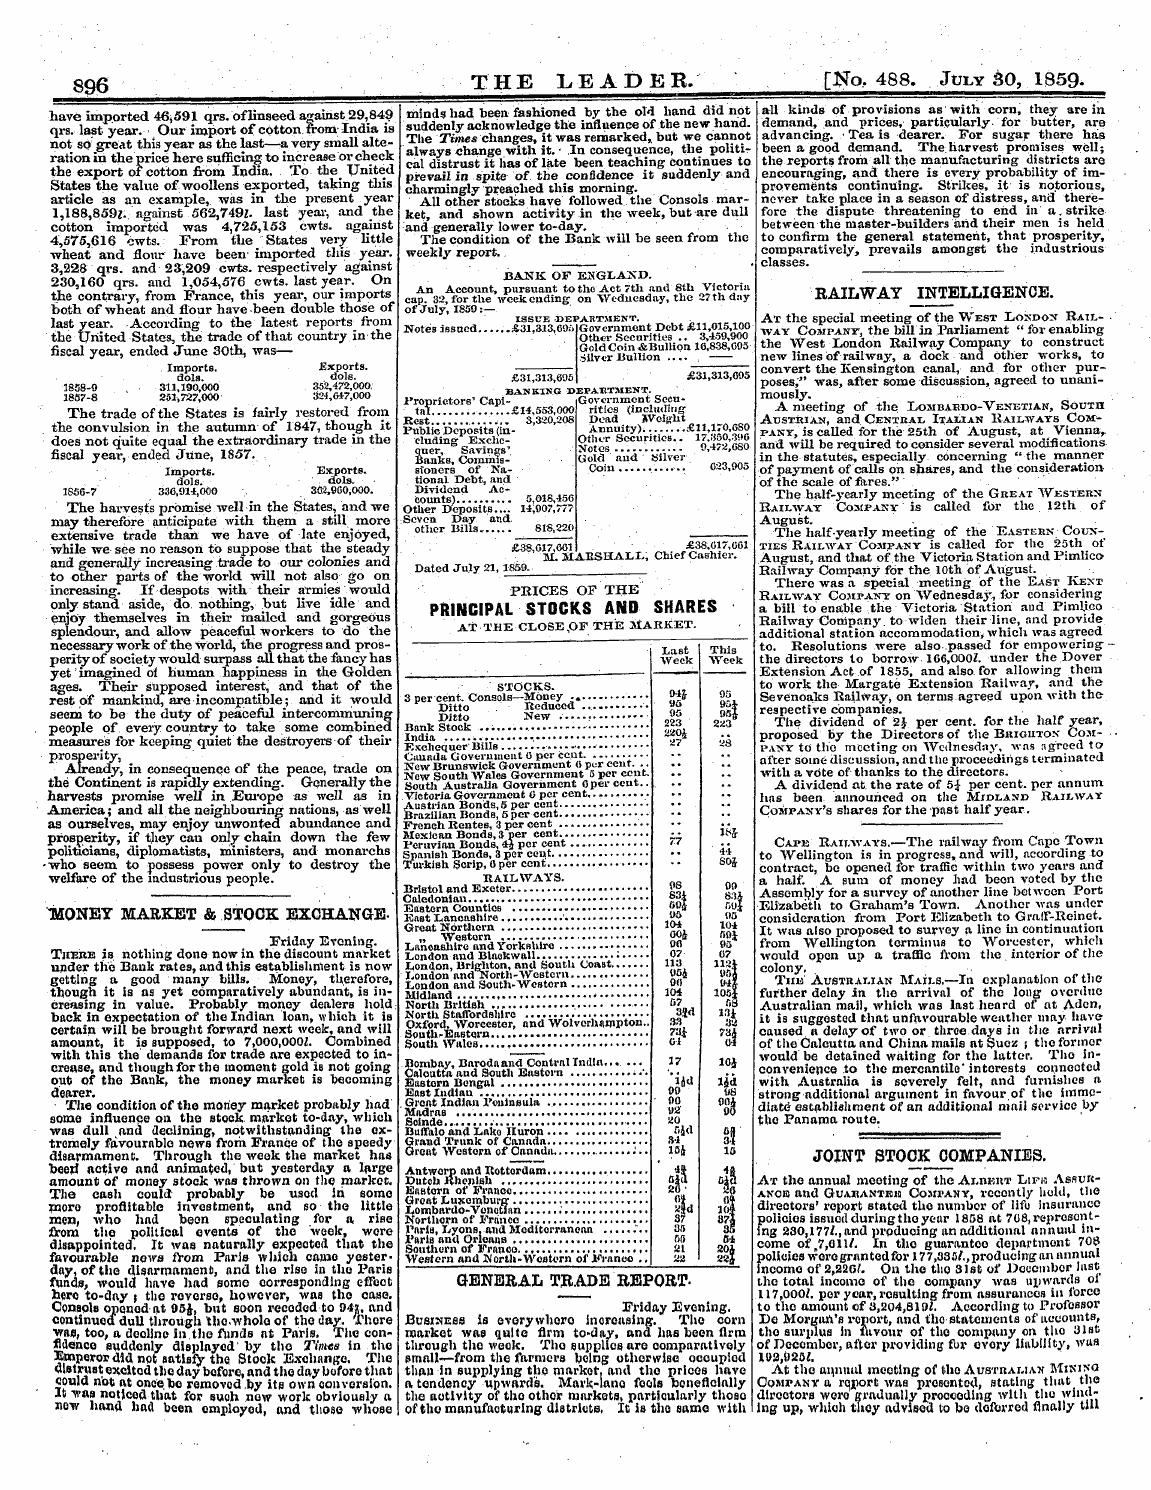 Leader (1850-1860): jS F Y, 2nd edition - 896 The Leader. [Ho, 488. July 30, 1859.